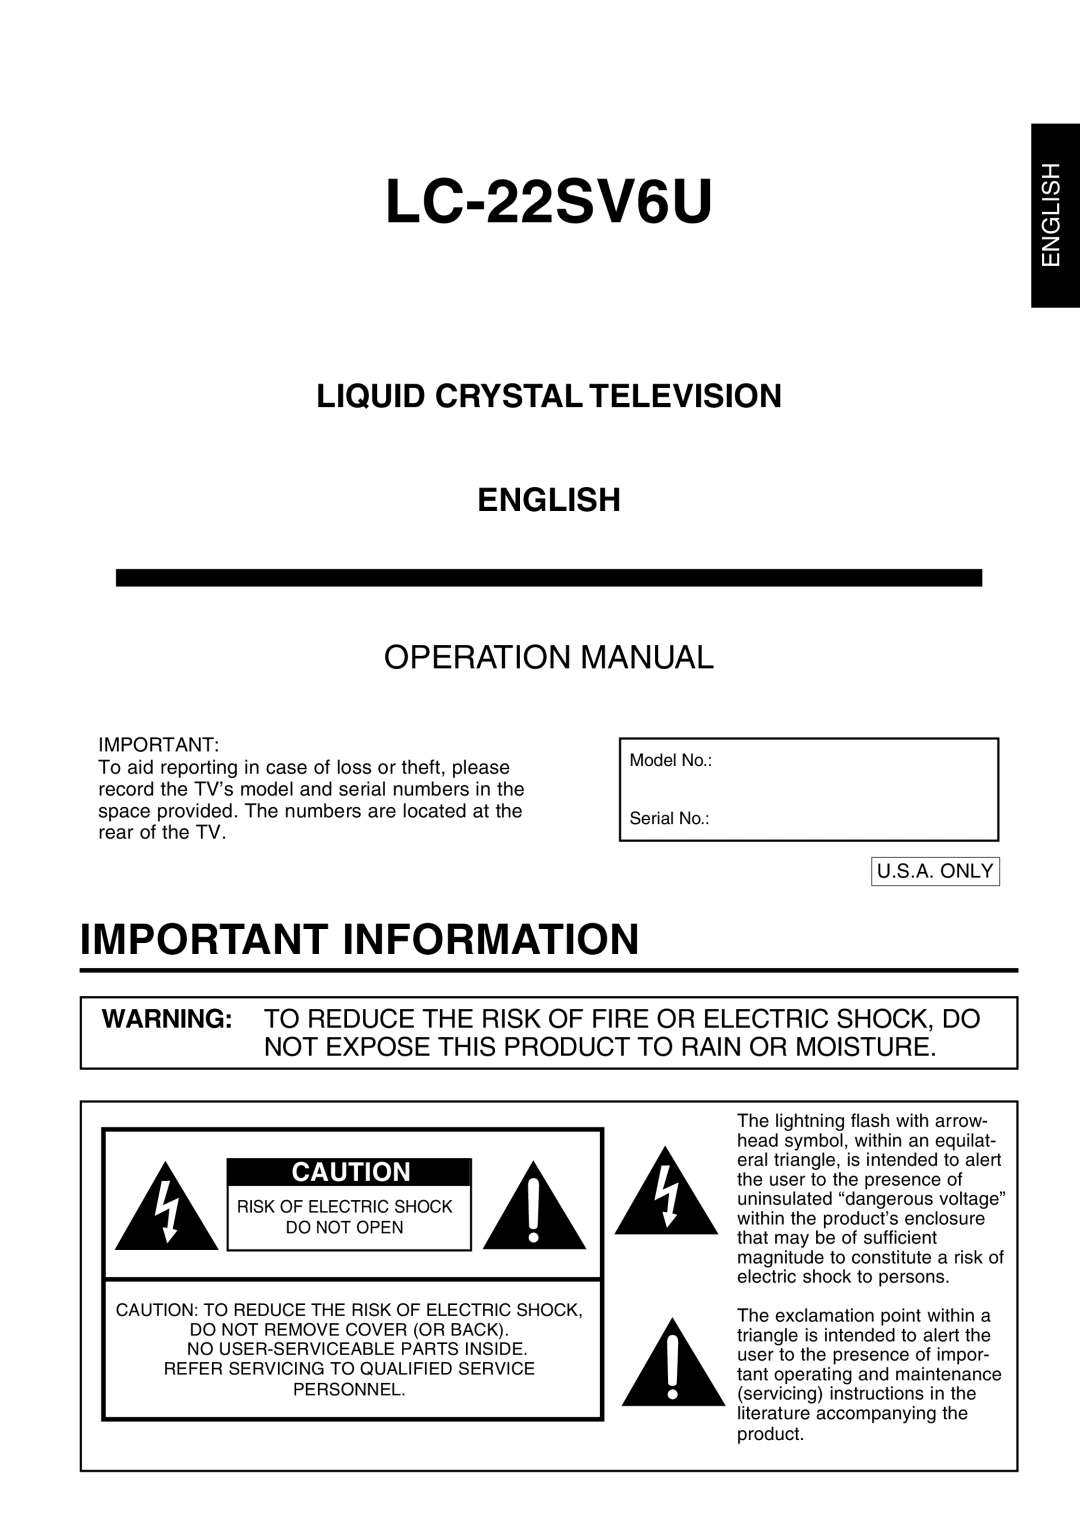 Sharp LC-22SV6U operation manual Important Information, Liquid Crystal Television English, Operation Manual 